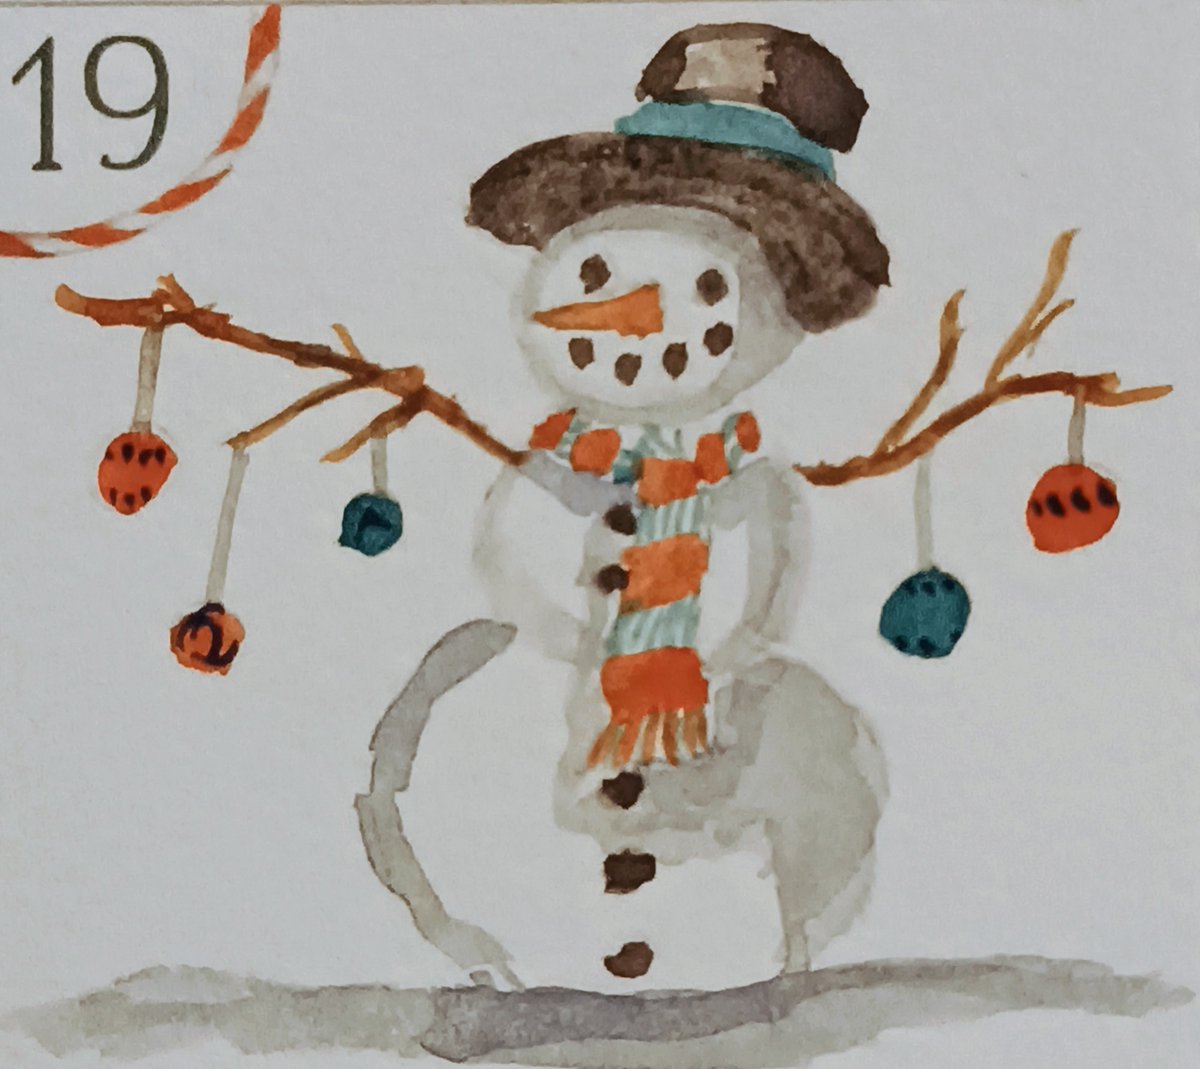 Day 19: Snowman 

De Winton Watercolour Advent Calendar

@dewintonpaperco
#dewintonpaperco #dewintonadvent
#watercolours
#painting #art #artmakesmehappy #watercolors #watercolourpainting #advent #adventcalendar #christmas #festive  #snowman #day19